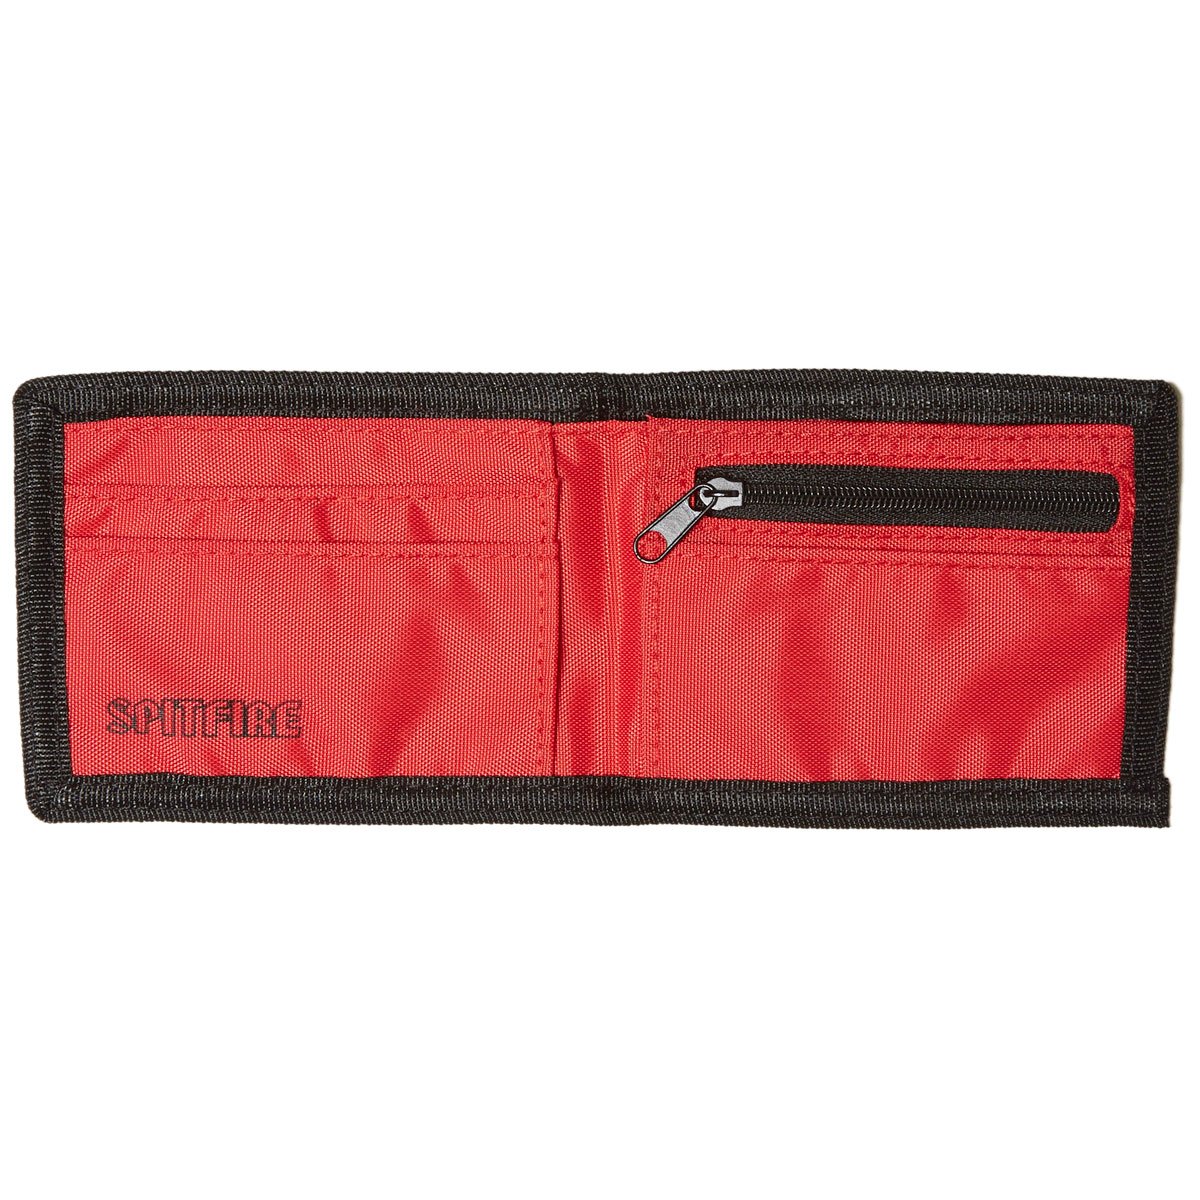 Spitfire Bighead Bi - Fold Wallet Red / Black